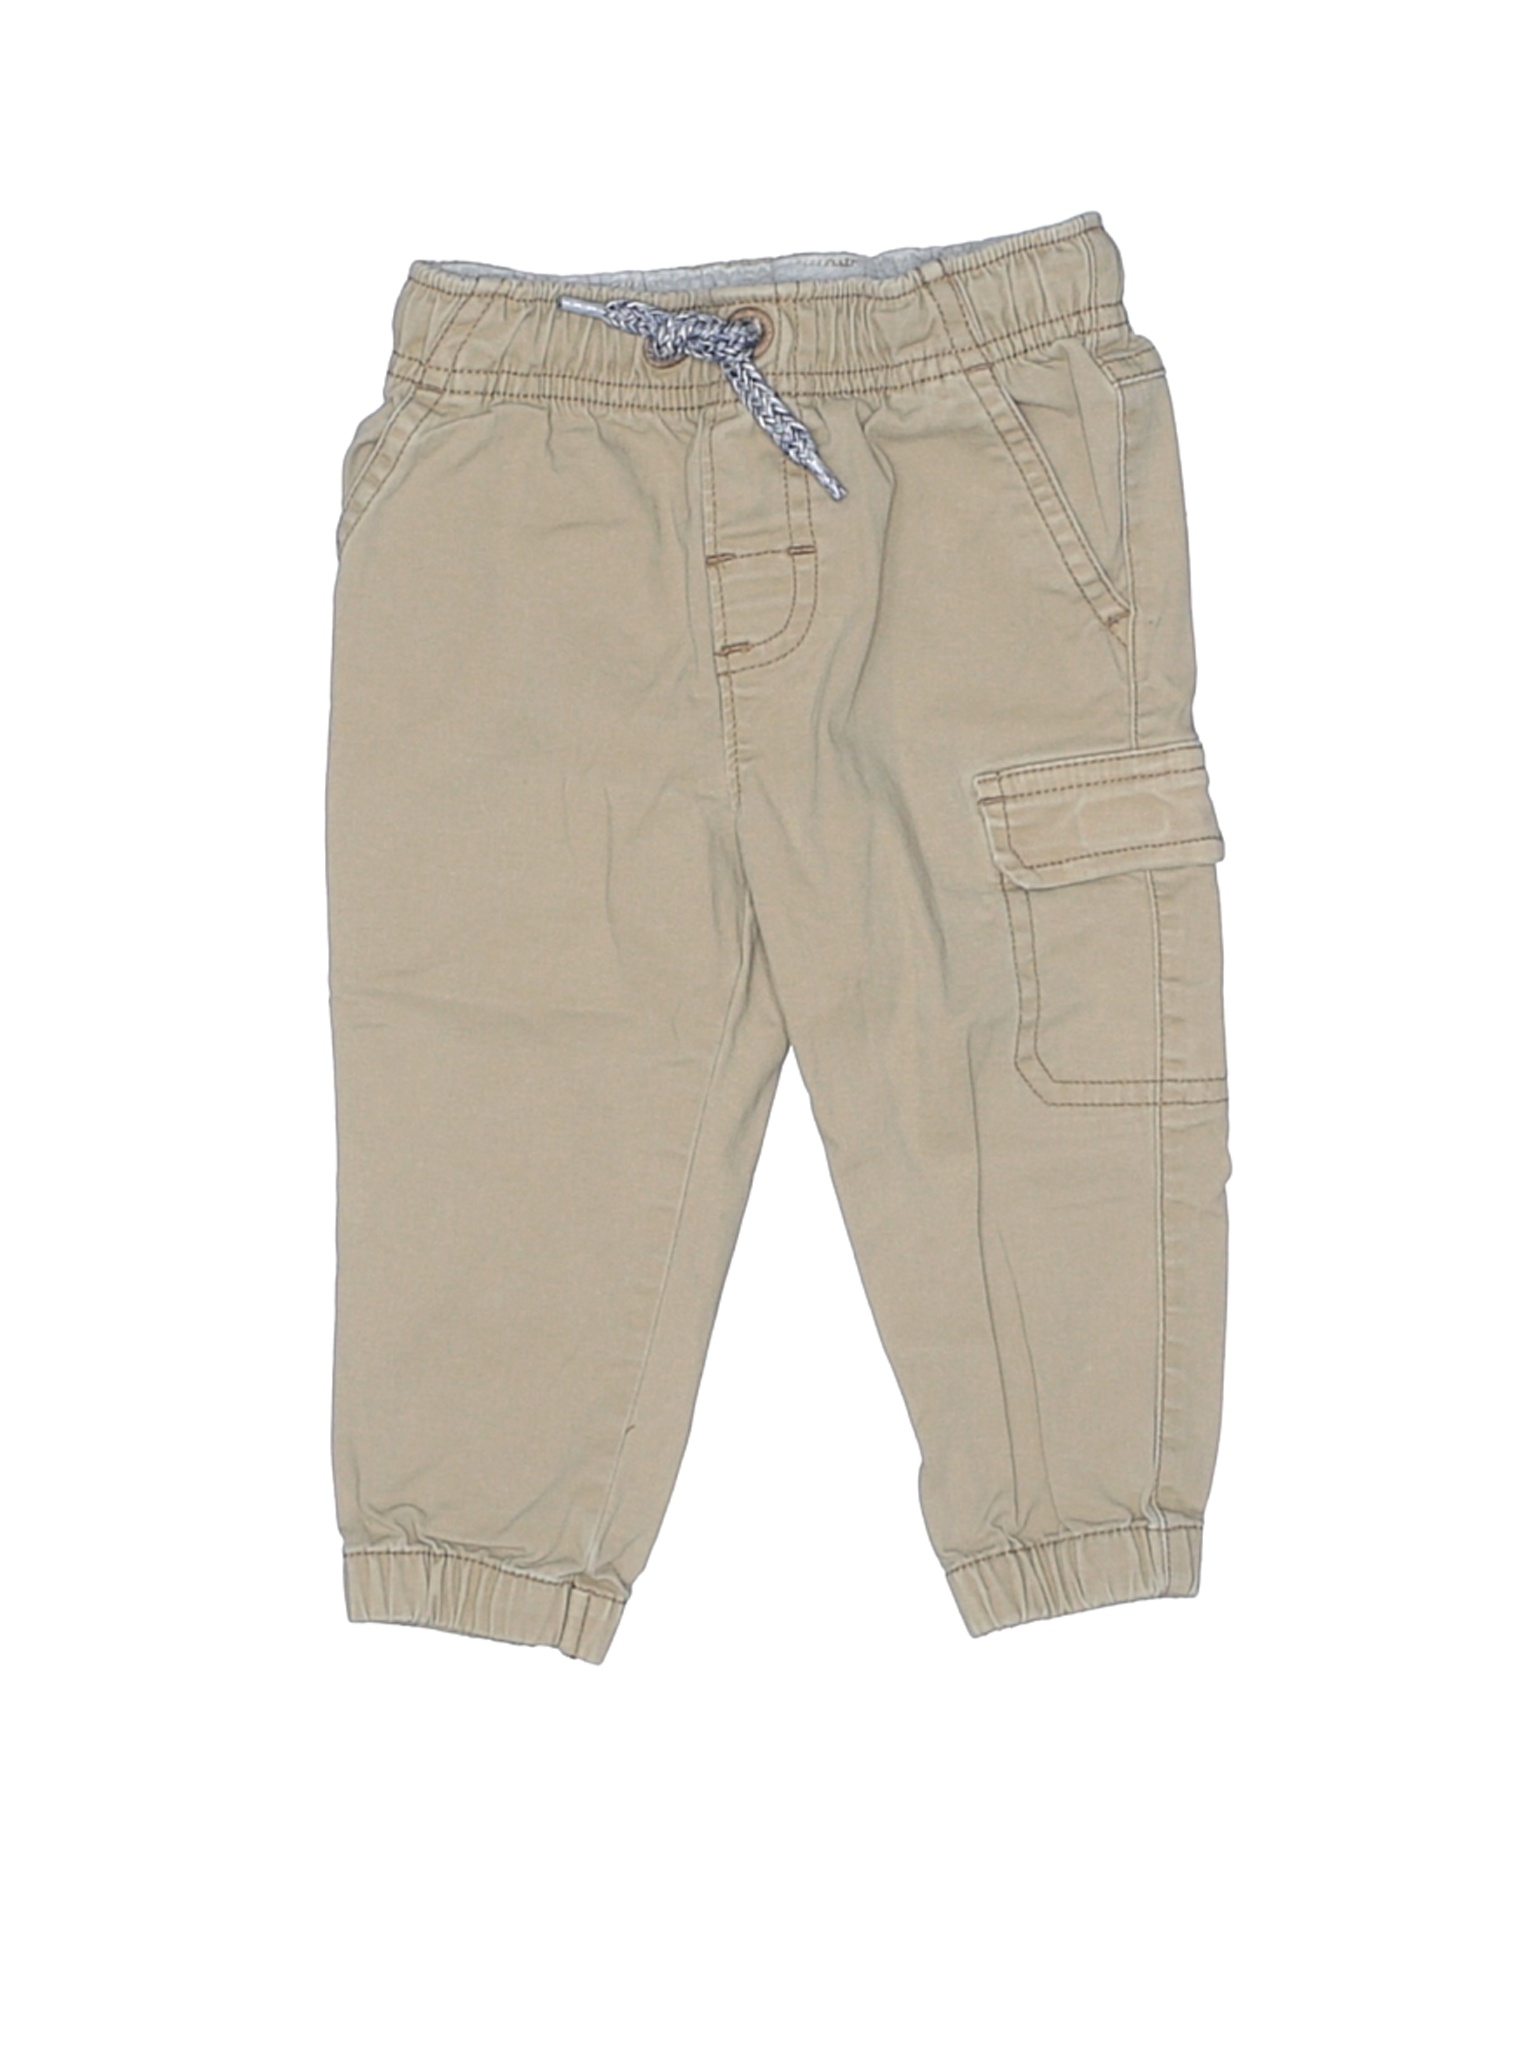 Carter's Boys Brown Cargo Pants 9 Months | eBay